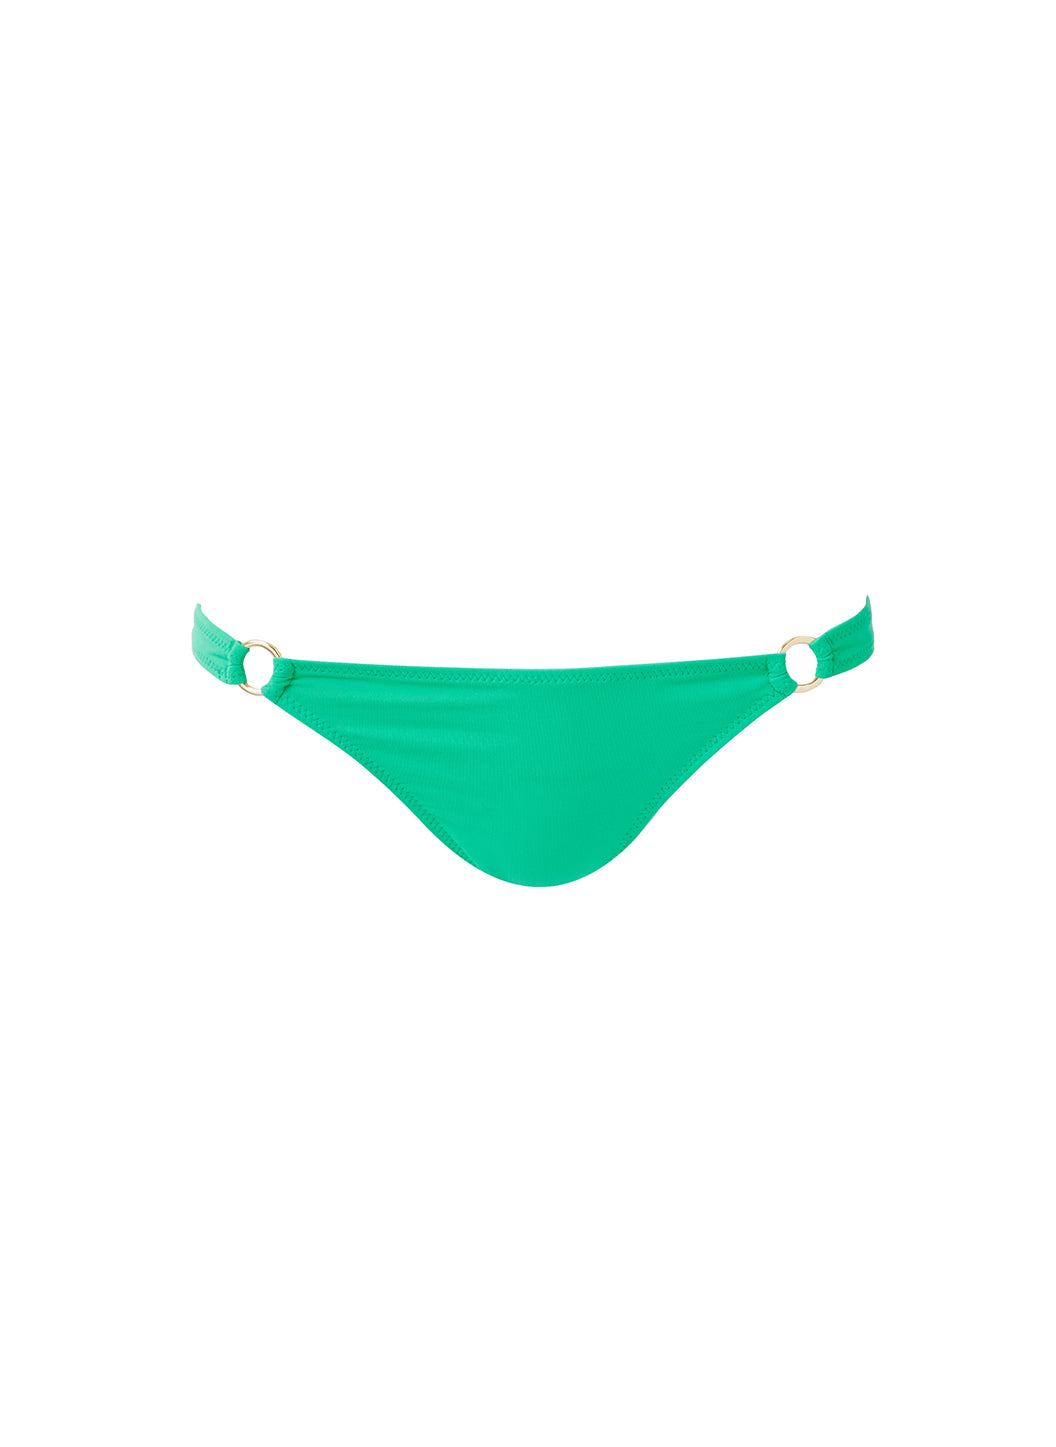 caracas green bikini bottom cutouts 2024